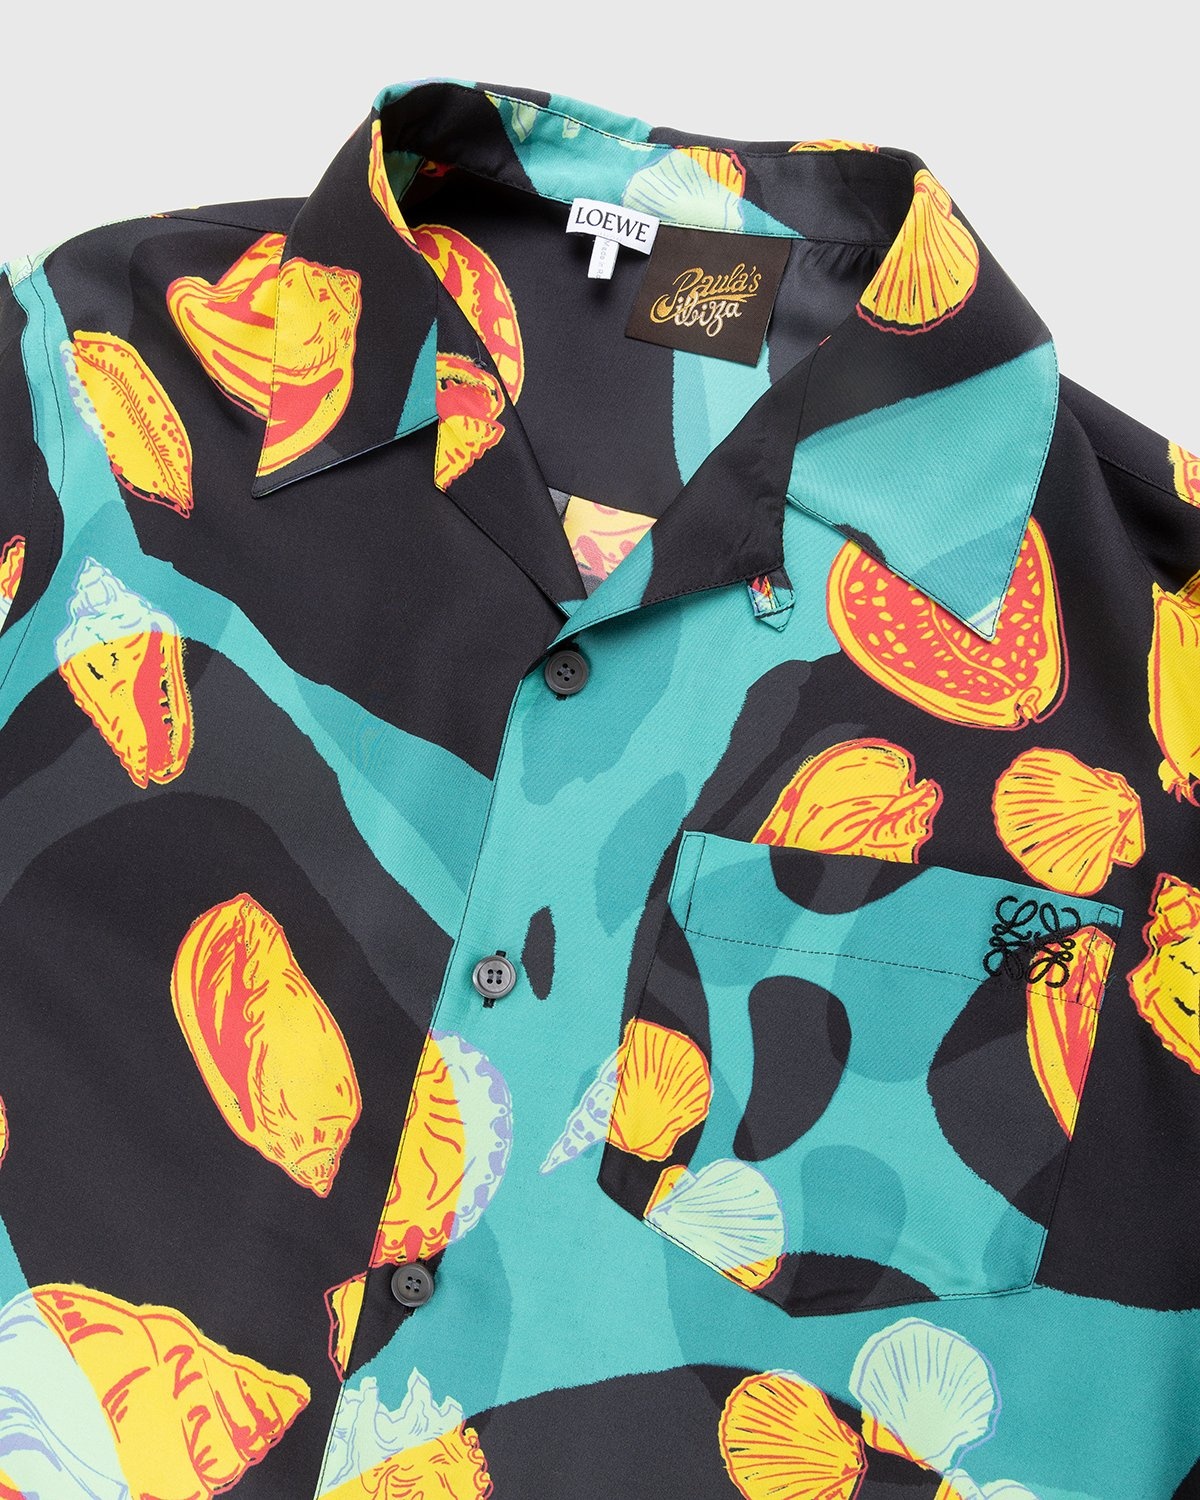 Loewe – Paula's Ibiza Shell Print Bowling Shirt Black - Shirts - Multi - Image 4